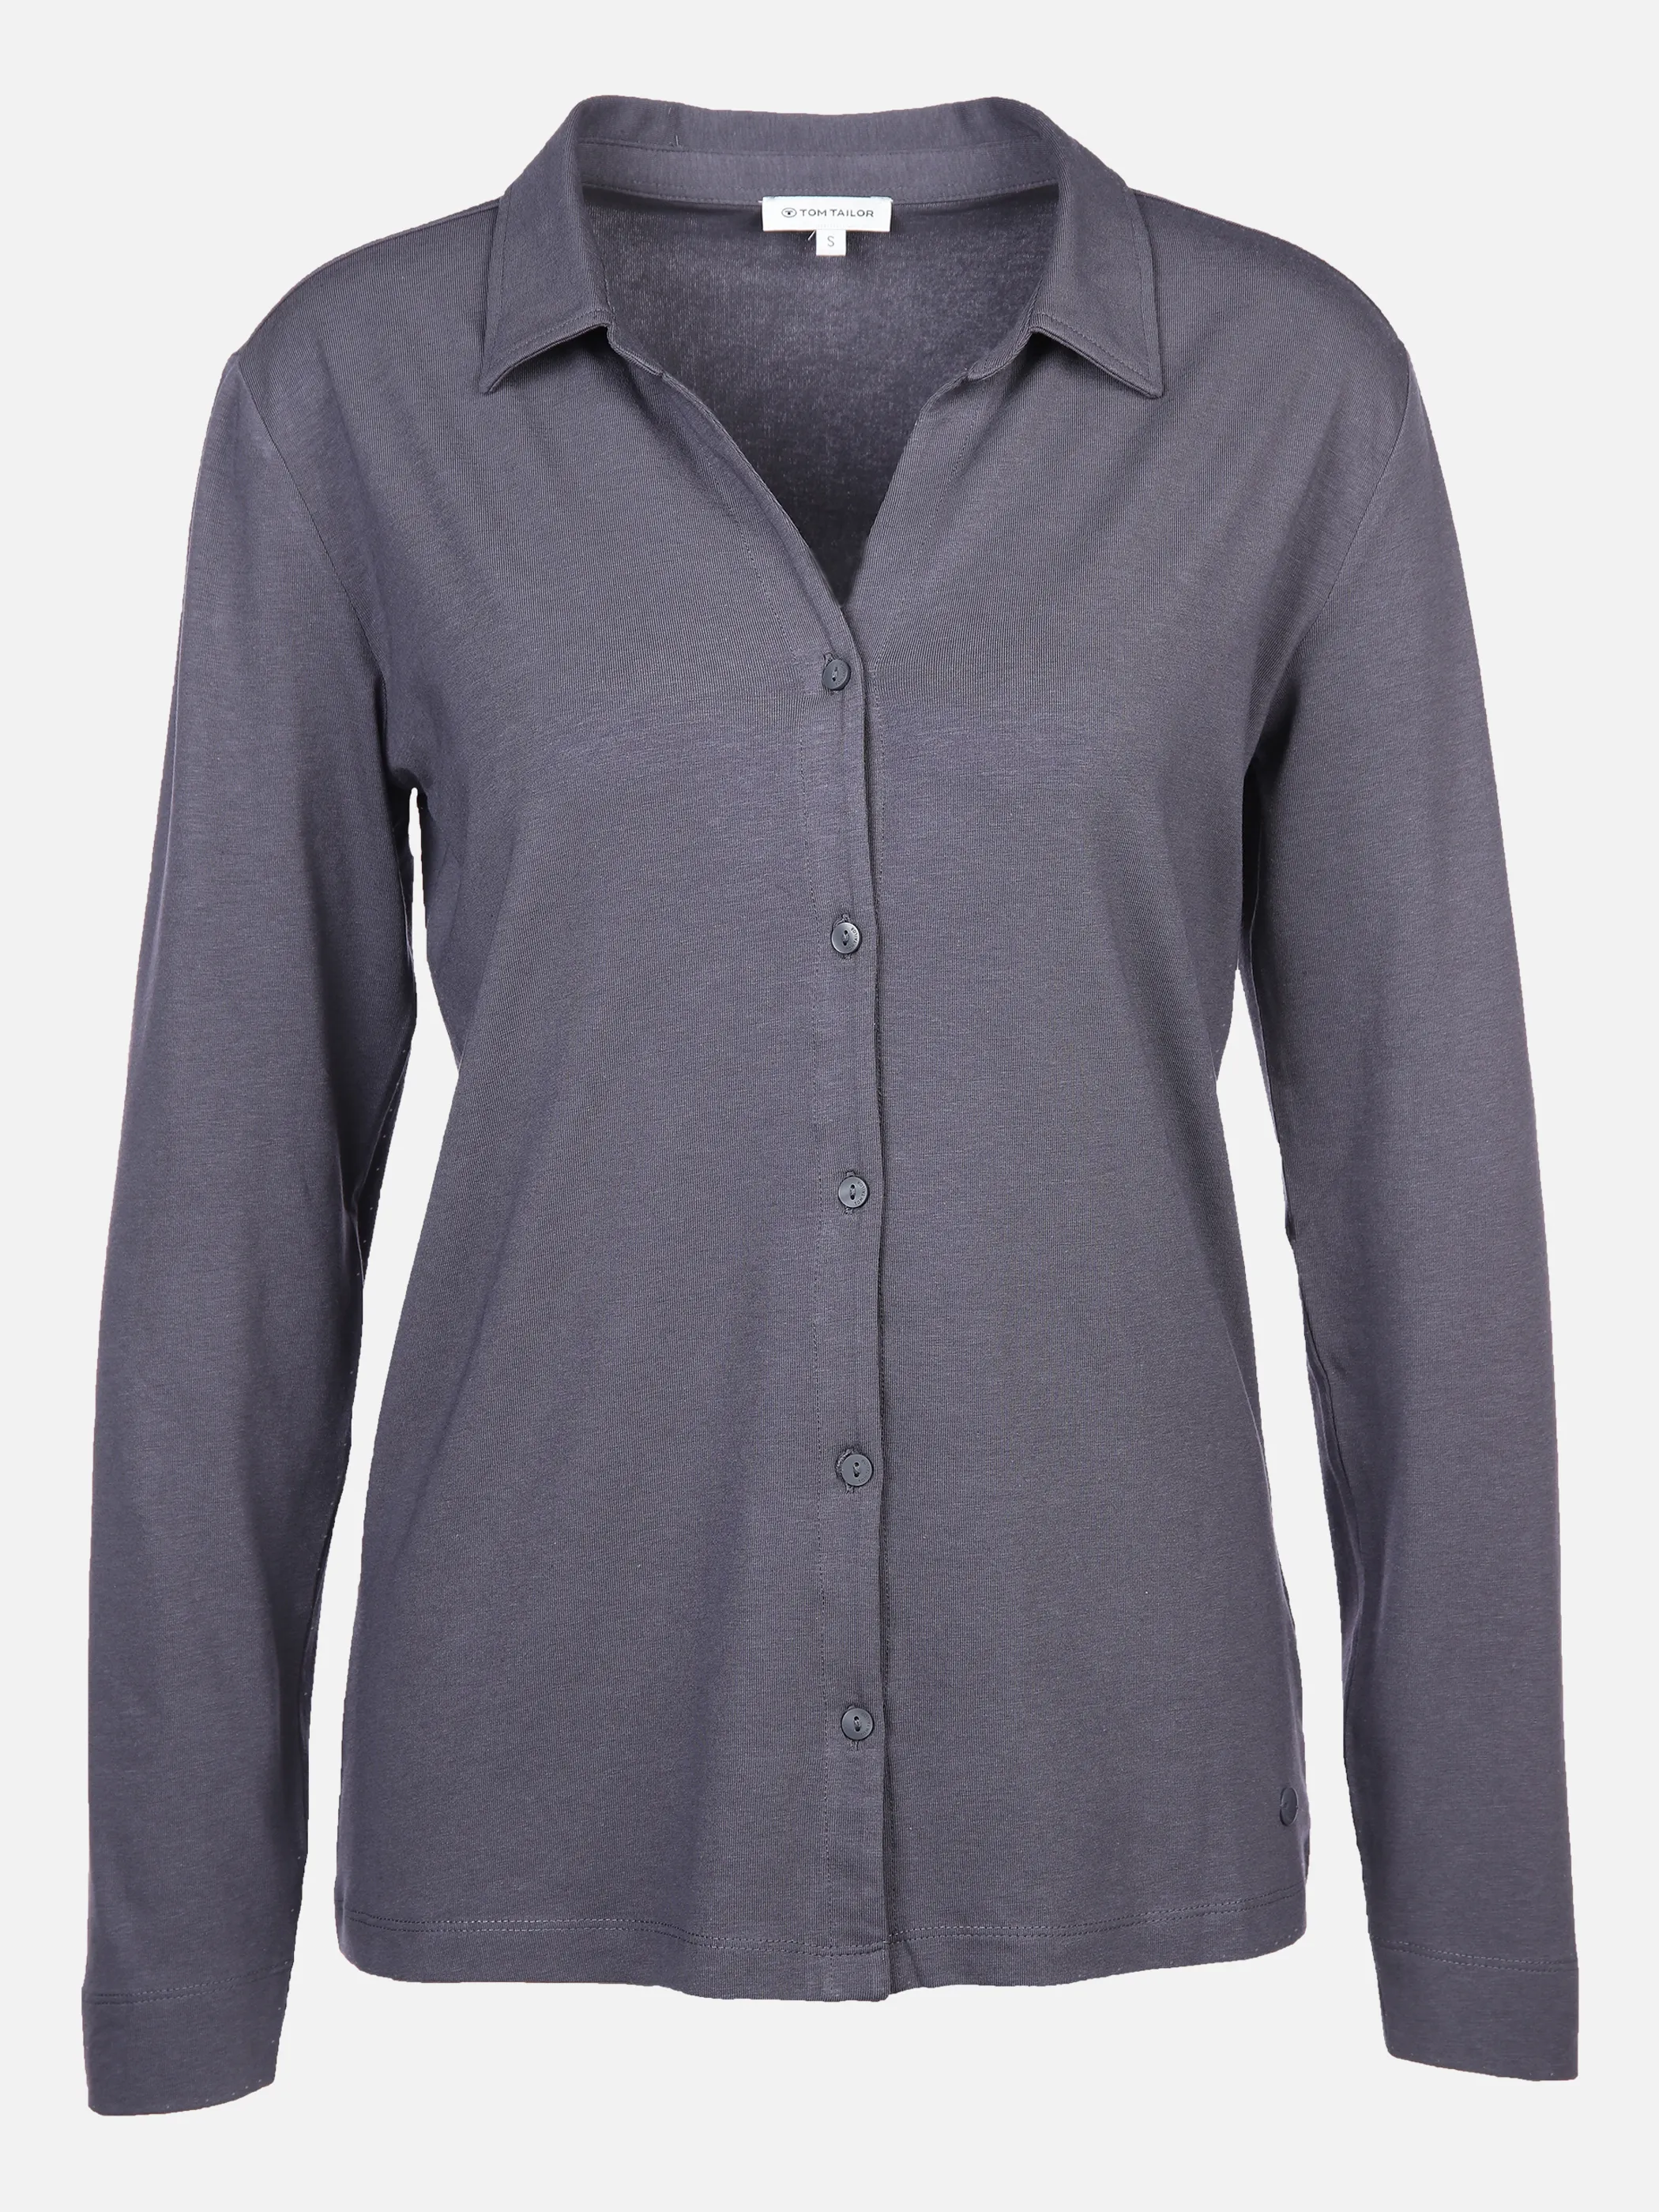 Tom Tailor 1032711 blouse T-shirt Grau 869450 15417 1